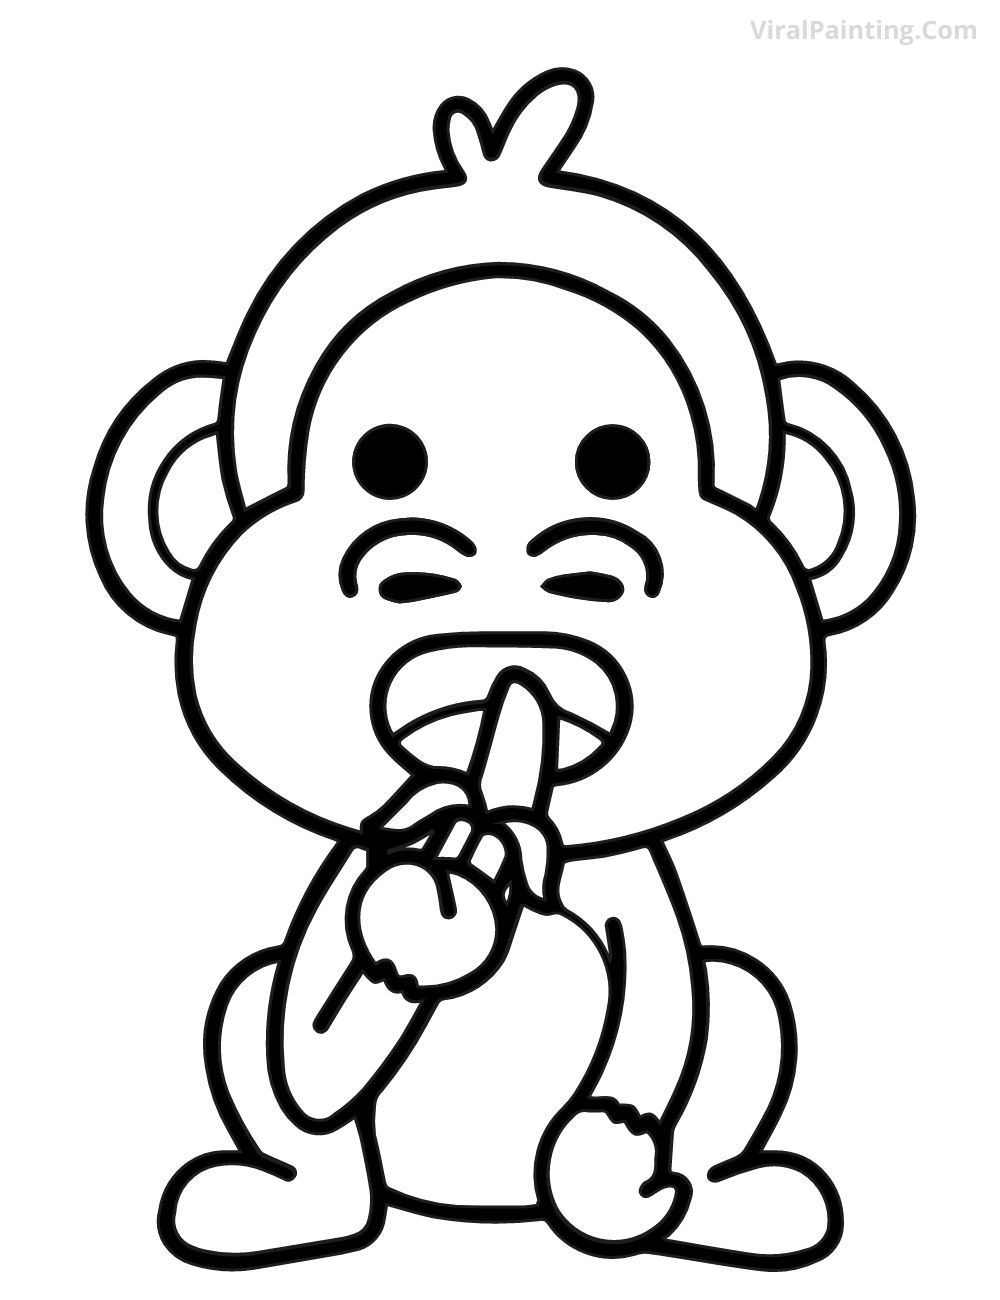 monkey drawing ideas 10+ by viralpainting.Com